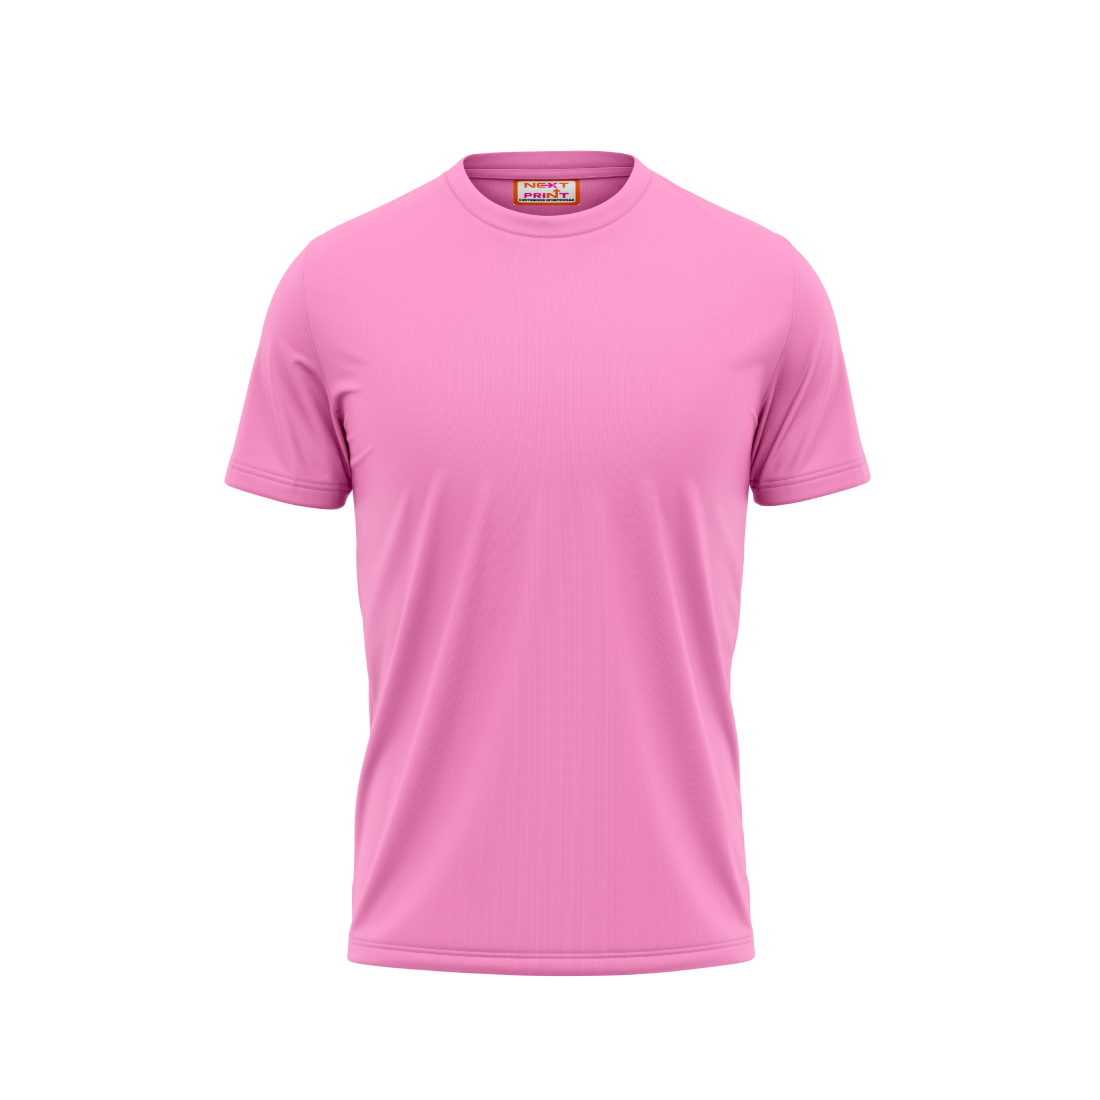 Plain Roundneck Pink Tshirt